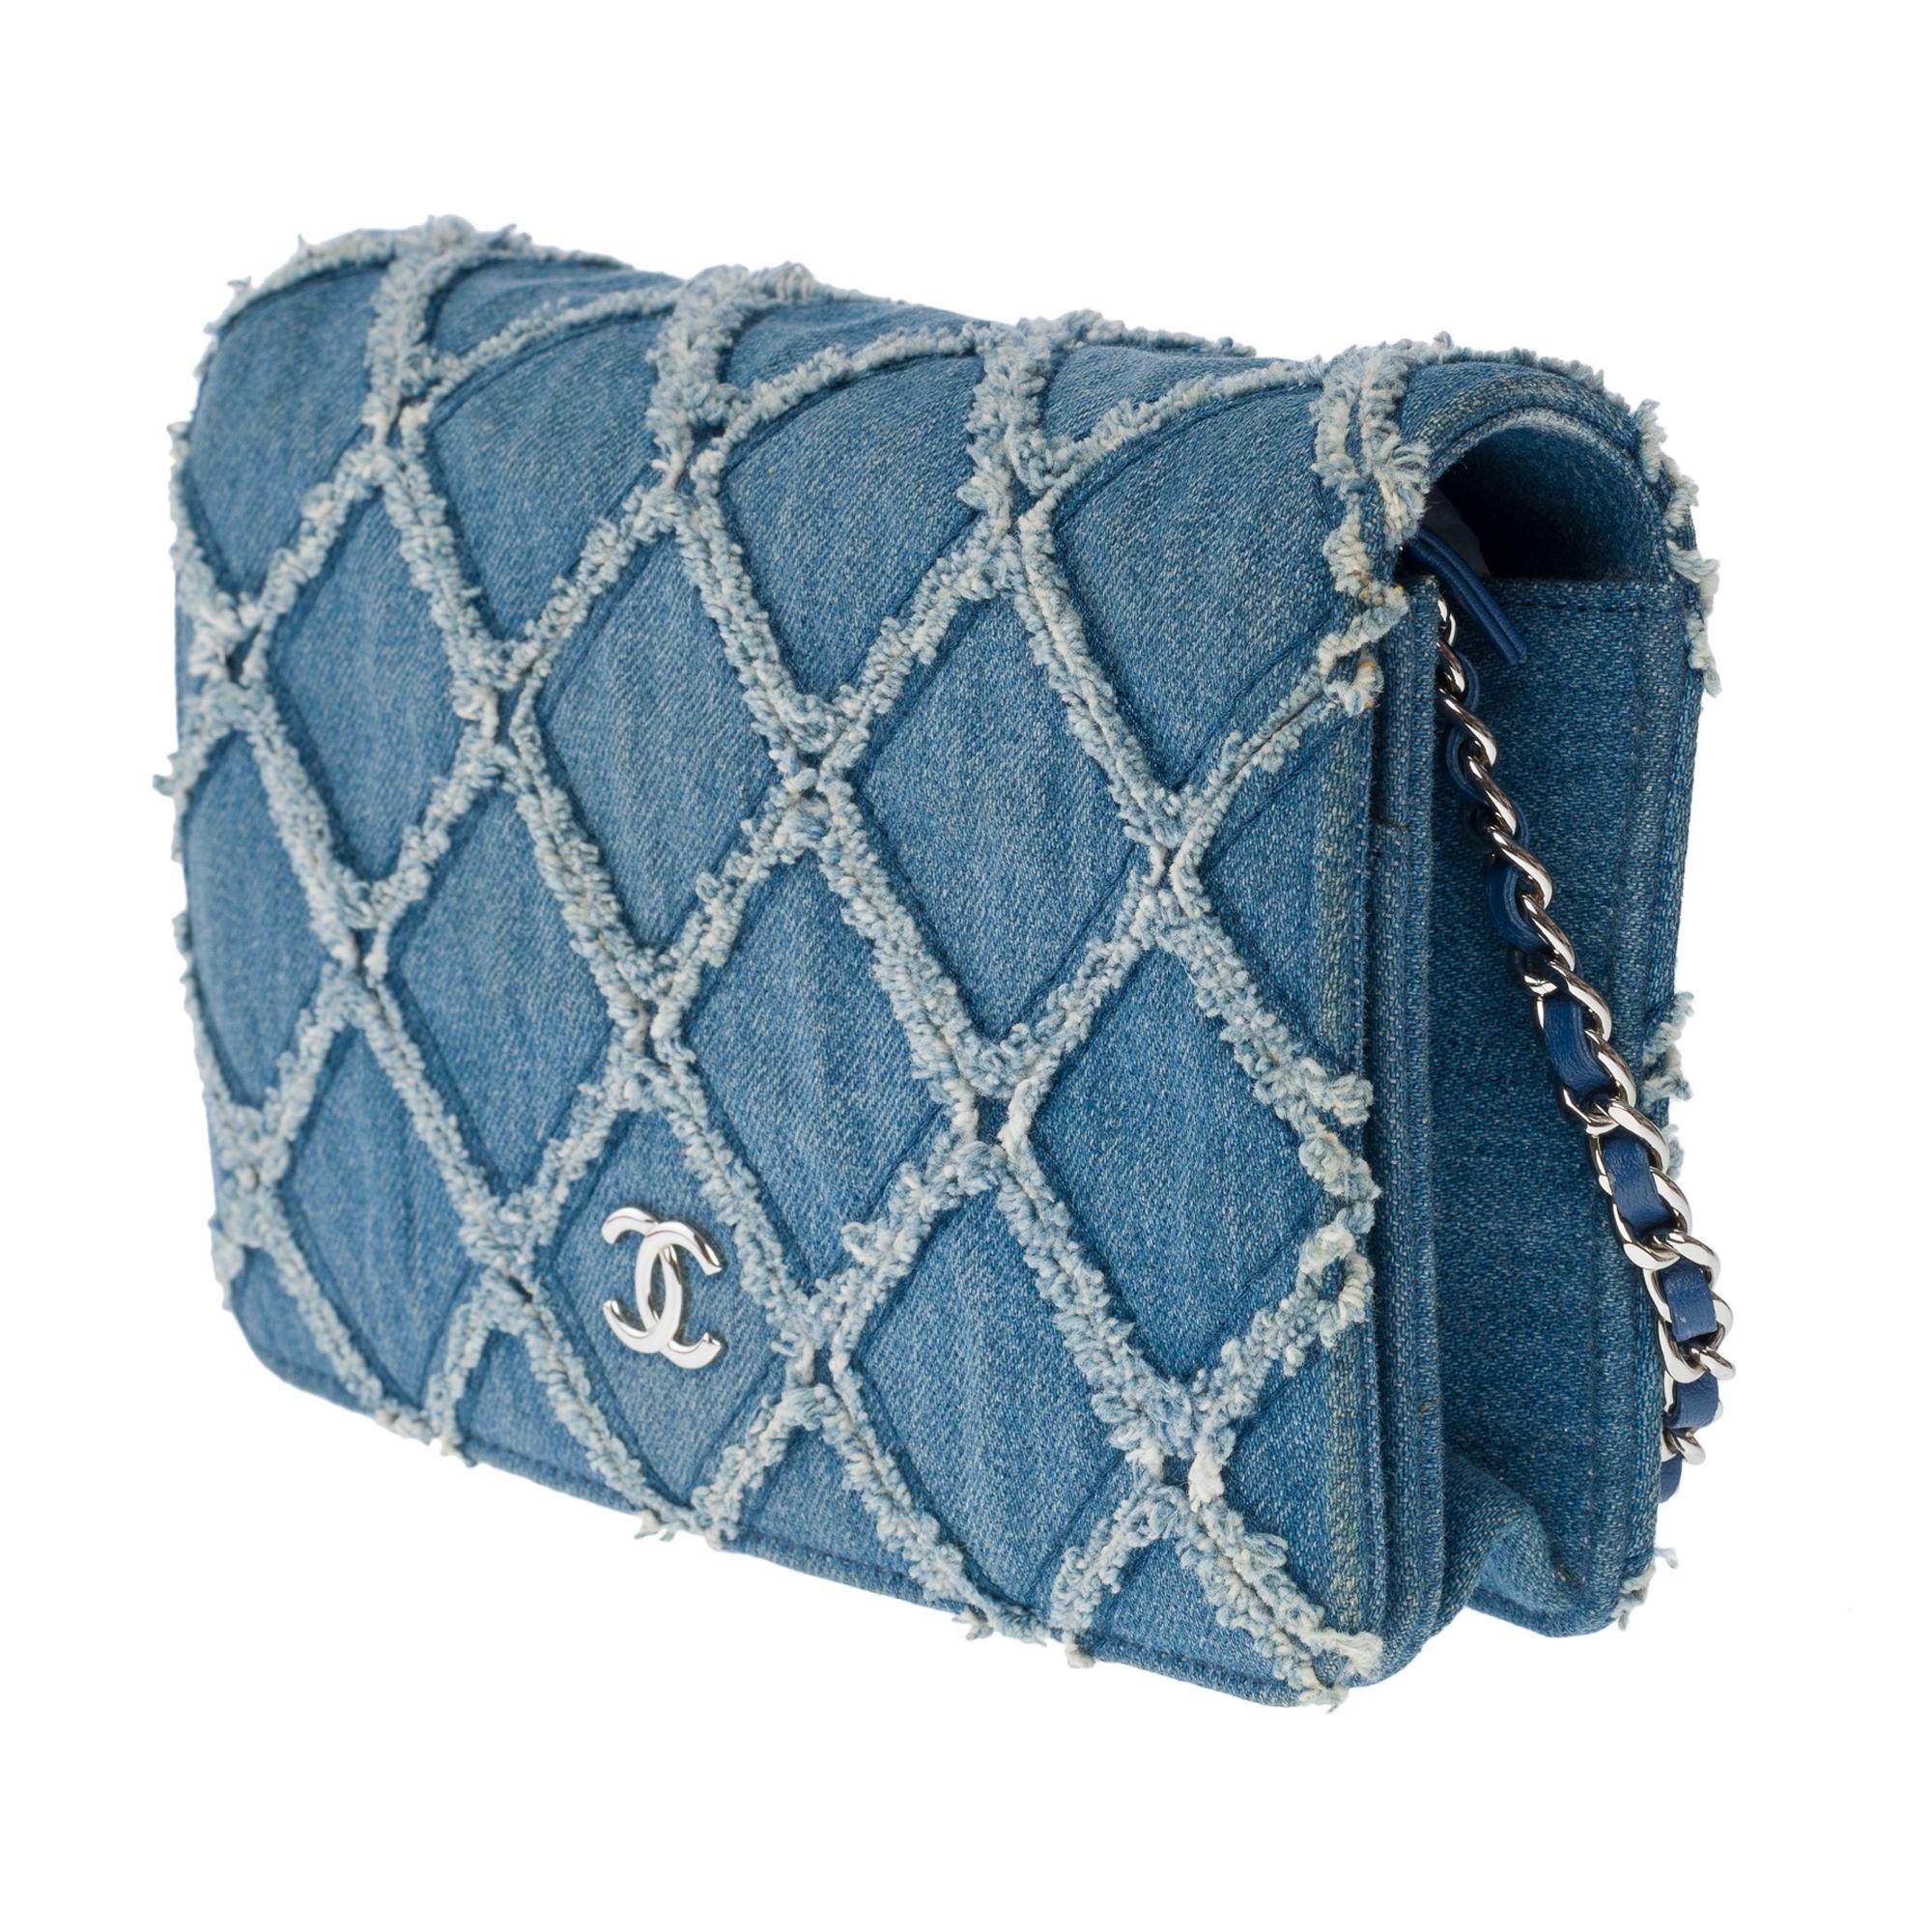 Rare & Amazing Chanel Wallet on Chain (WOC) shoulder bag in Blue denim, SHW 1